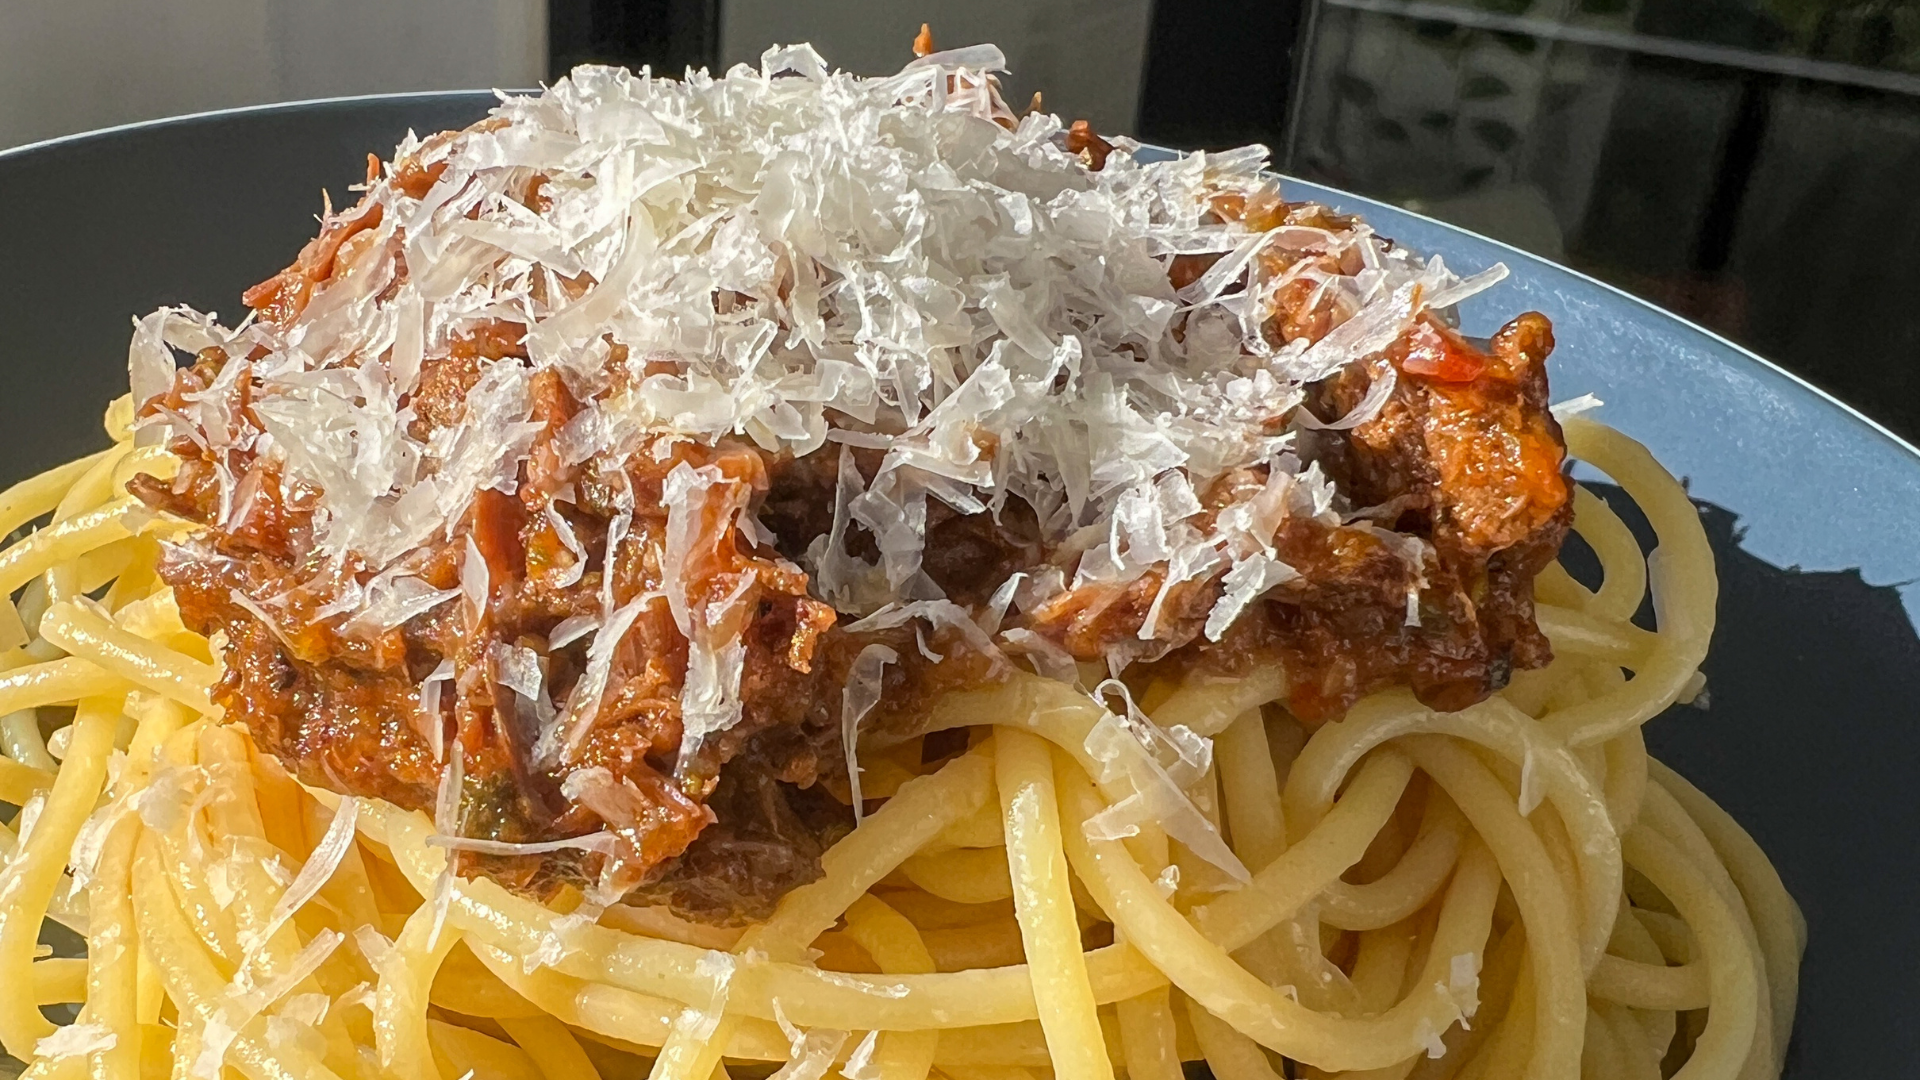 a plate of spaghetti with kangaroo ragu and parmesan cheese